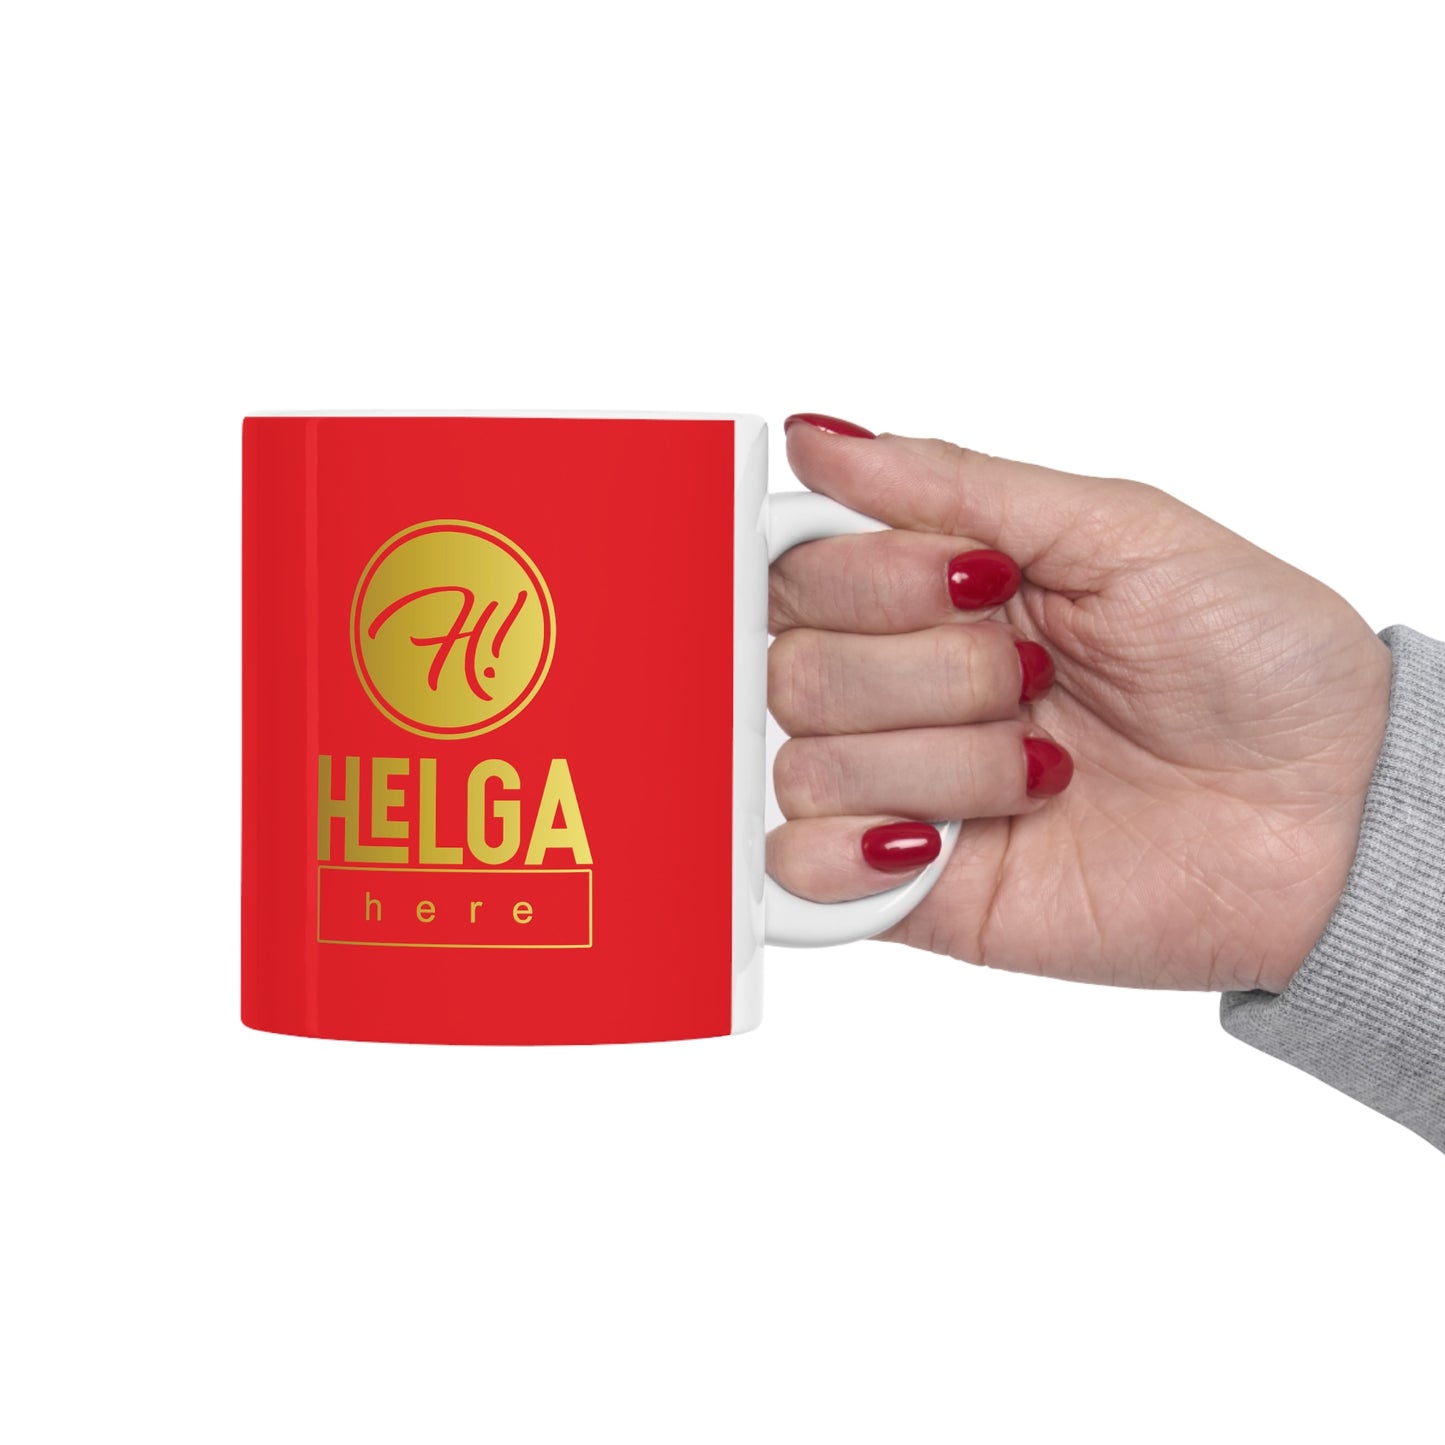 Helga's (probably not Coffee...) Ceramic Mug 11oz